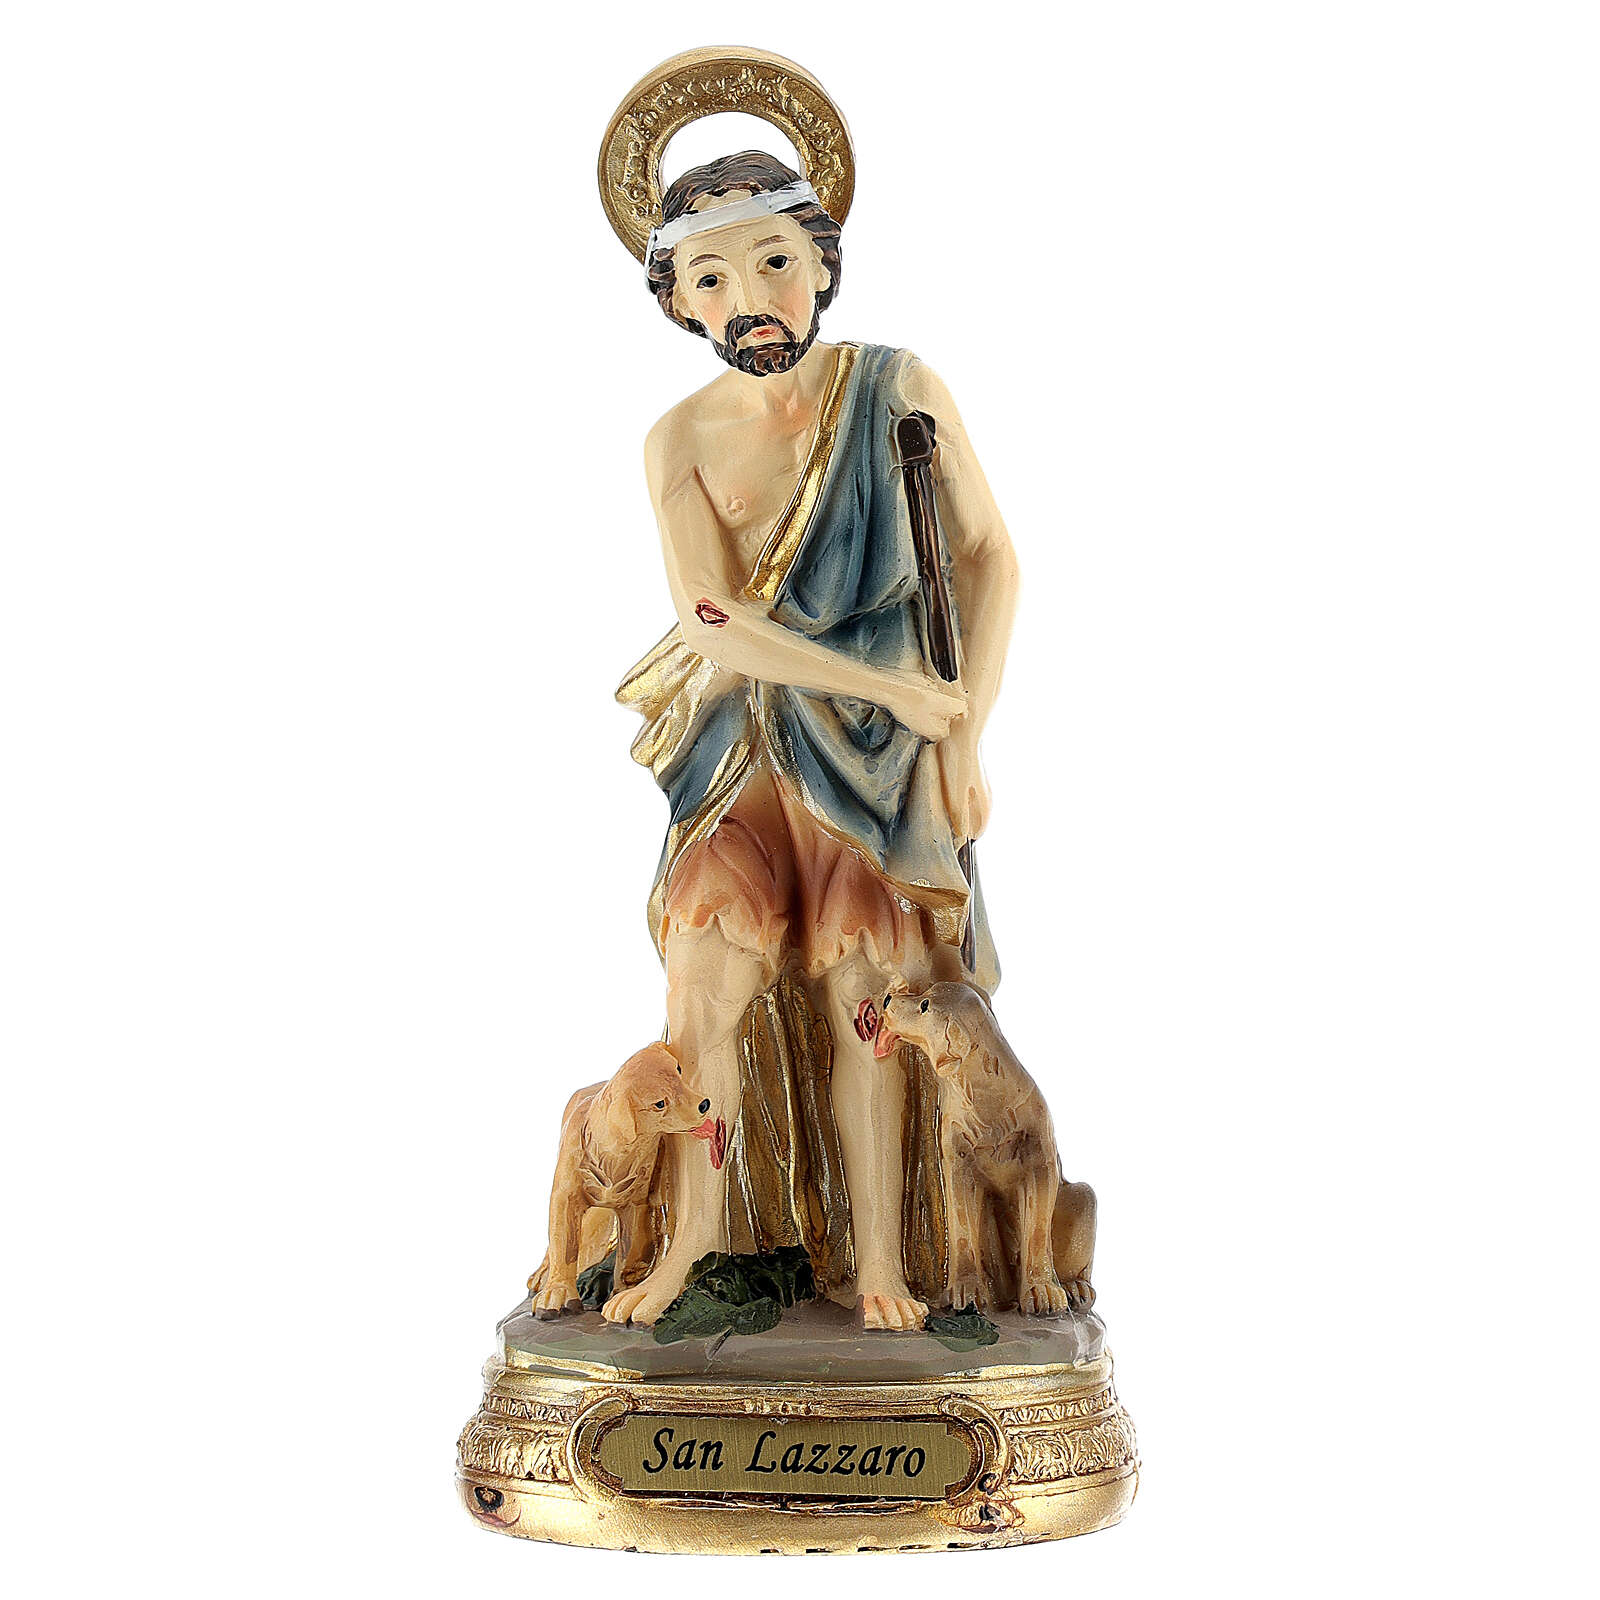 purpose of saint lazarus statue